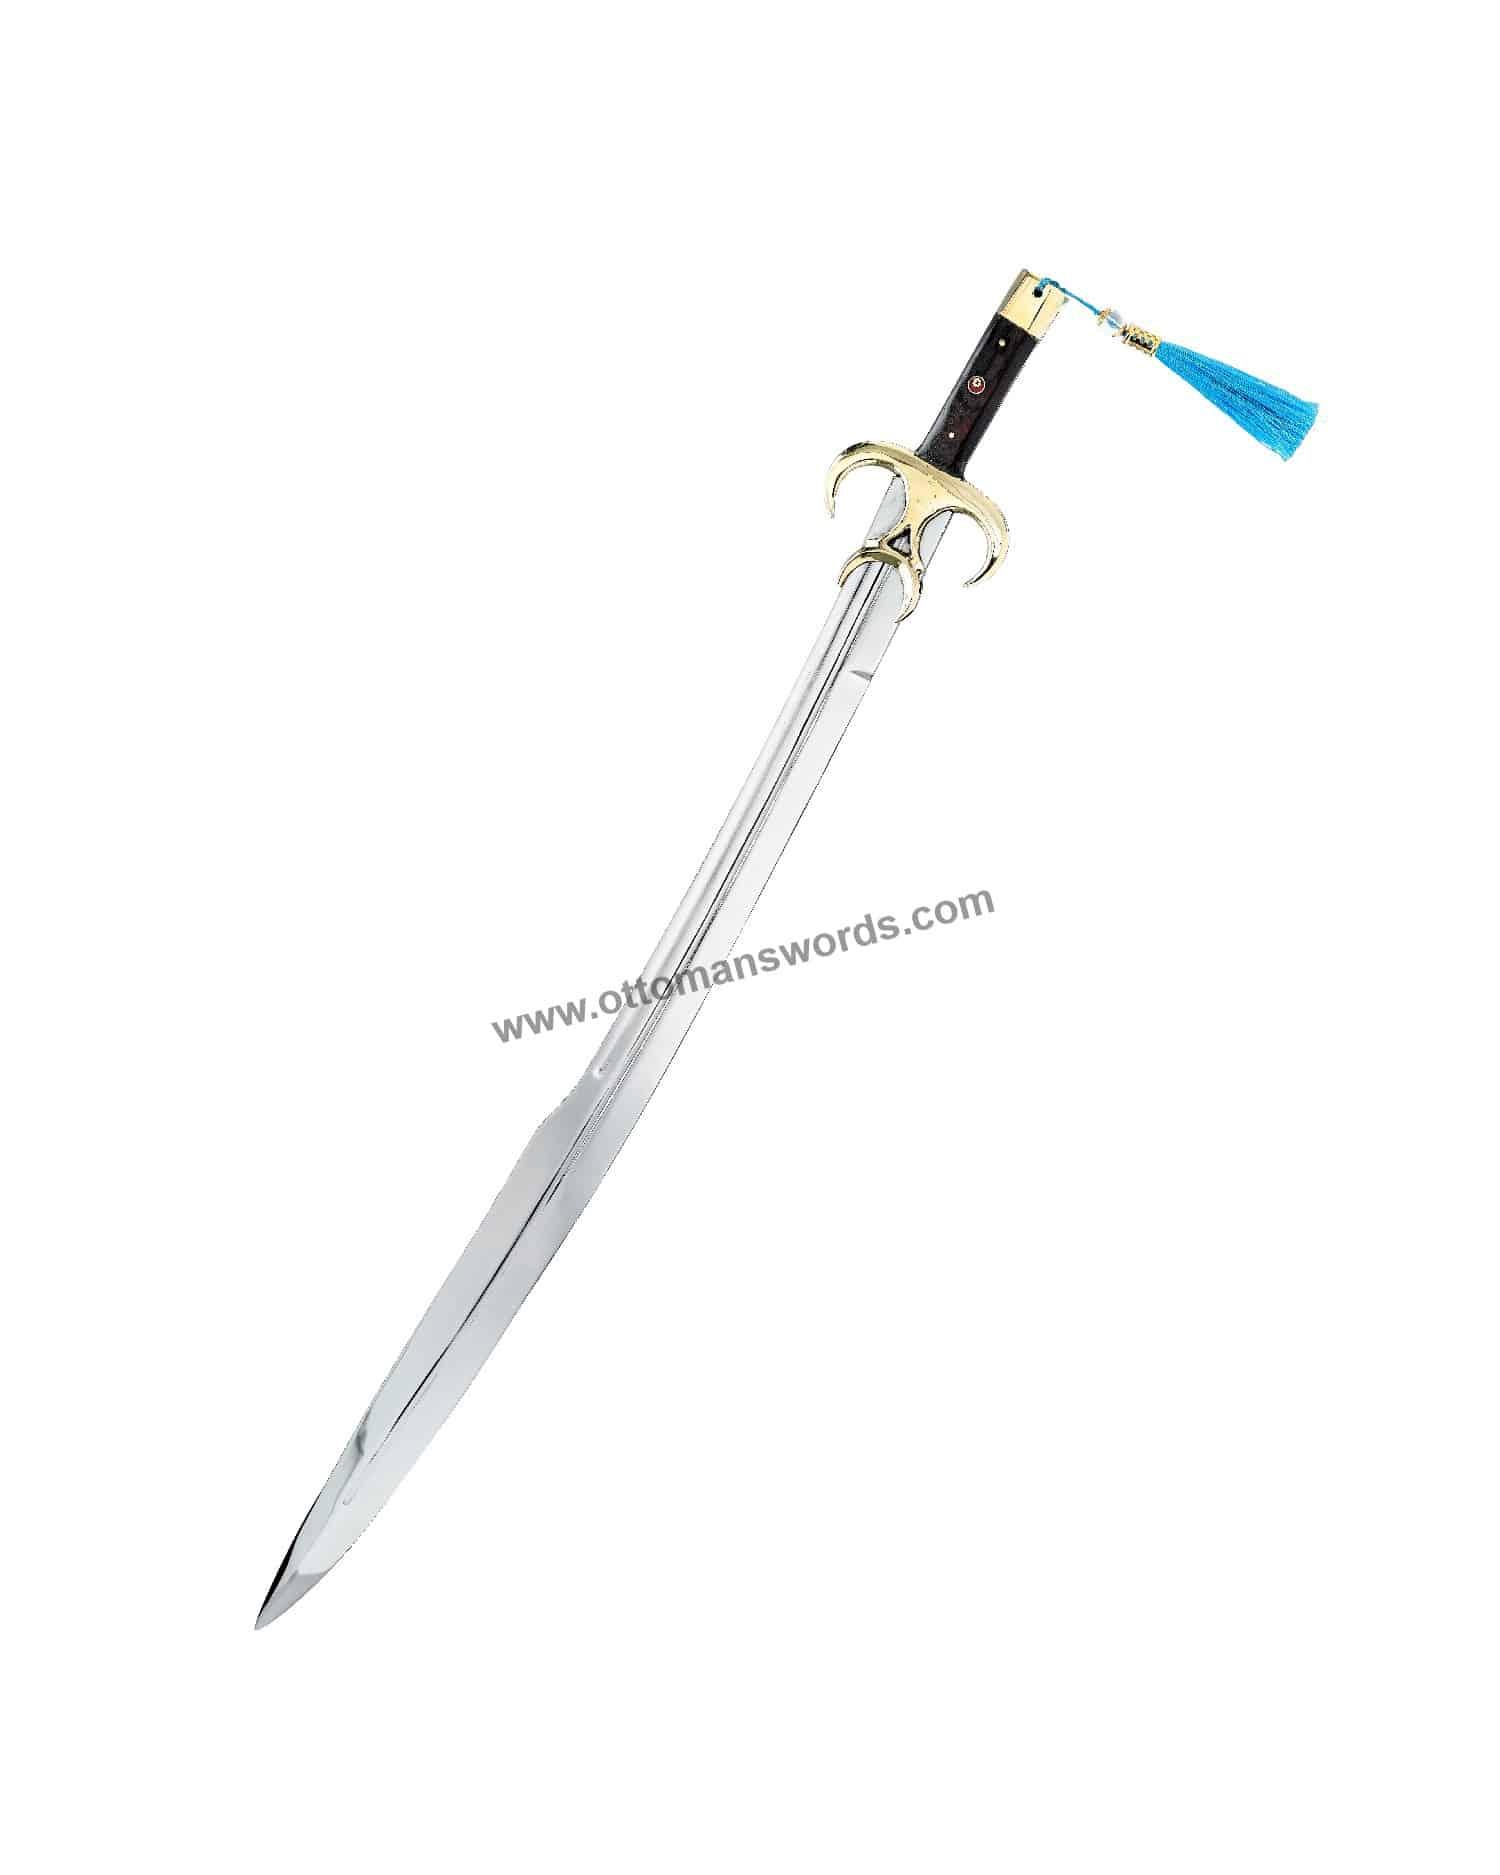 ottoman sword online (1)